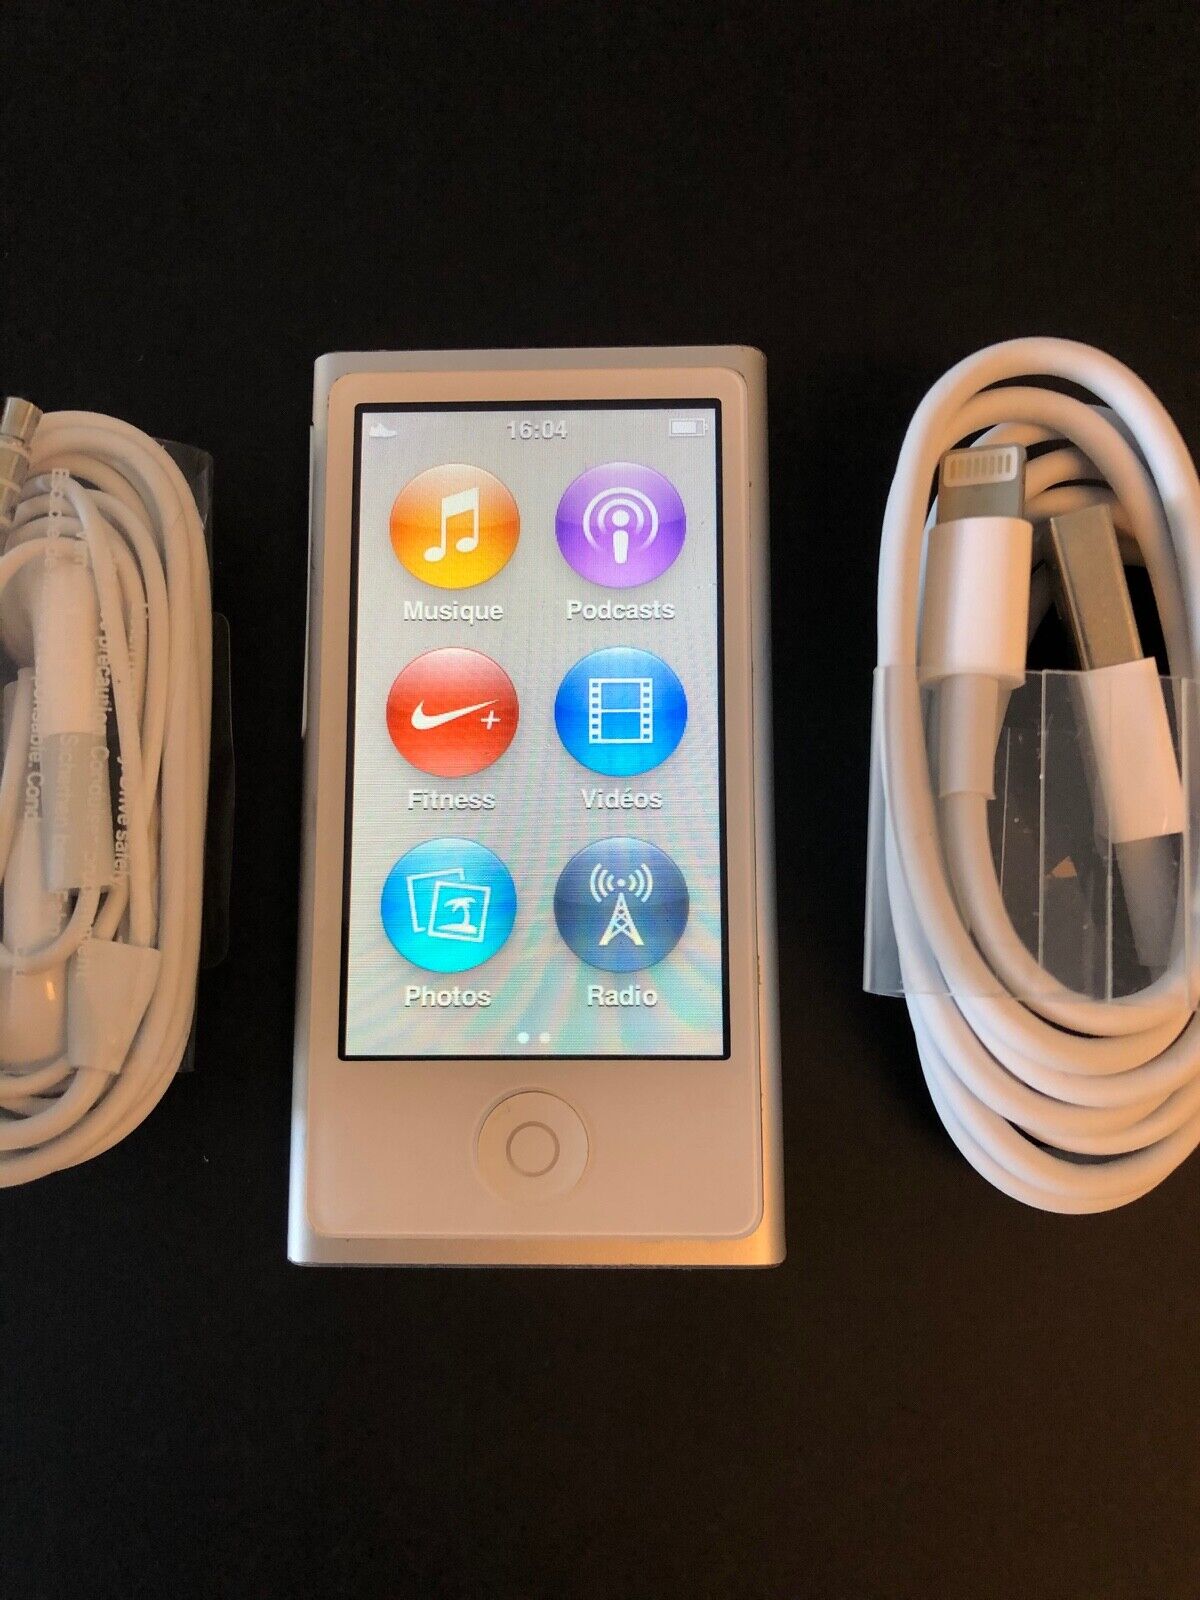 Apple iPod Nano 7th Generation Silver (16GB) for sale online | eBay